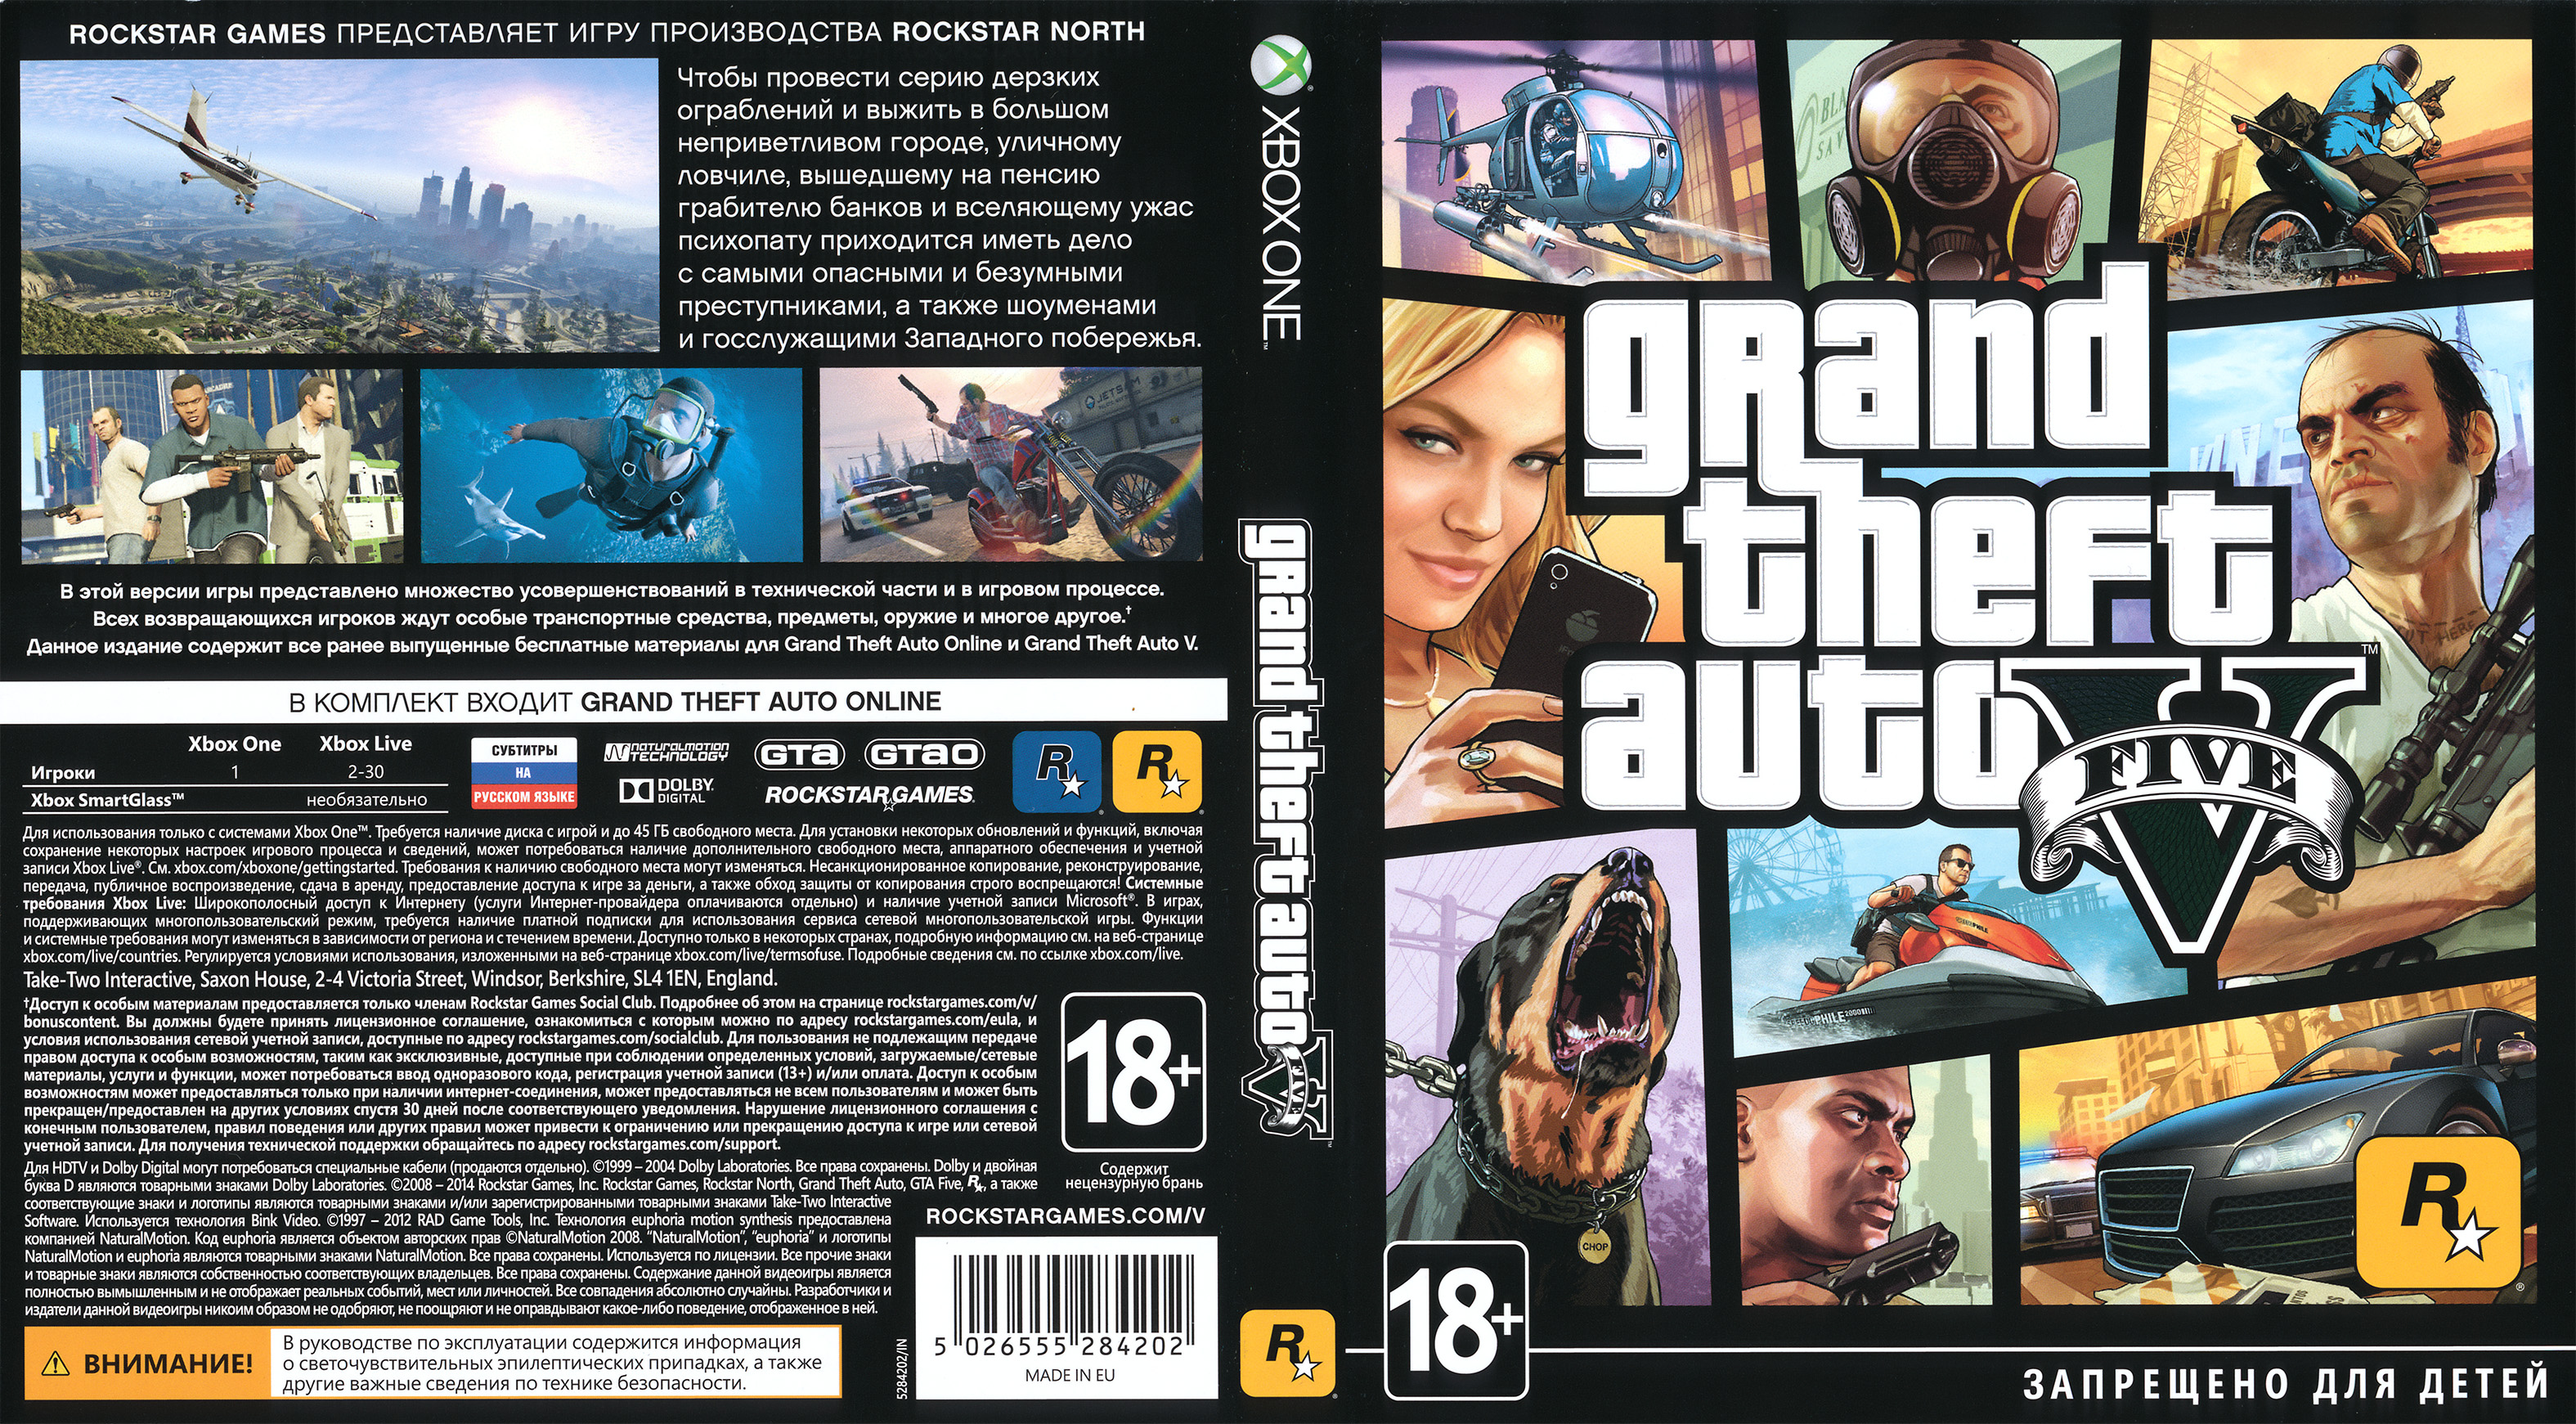 Grand Theft Auto V - Download